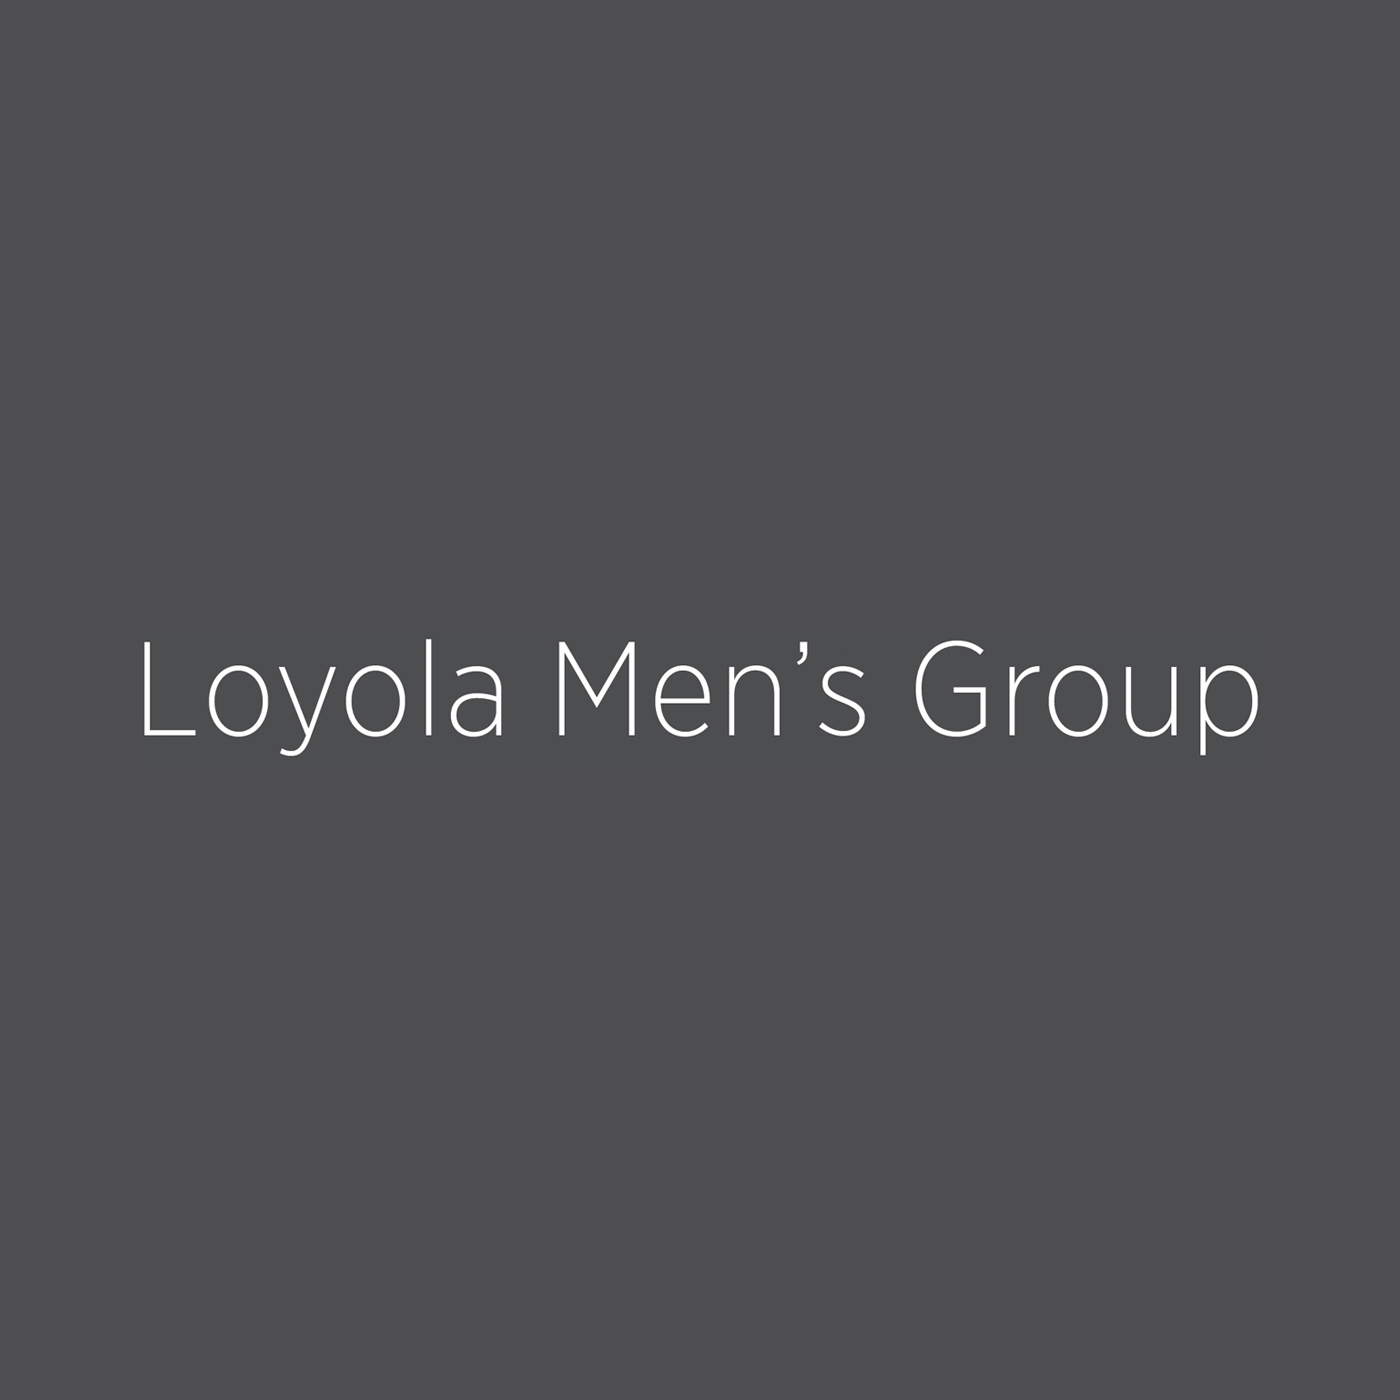 Loyola Men's Group